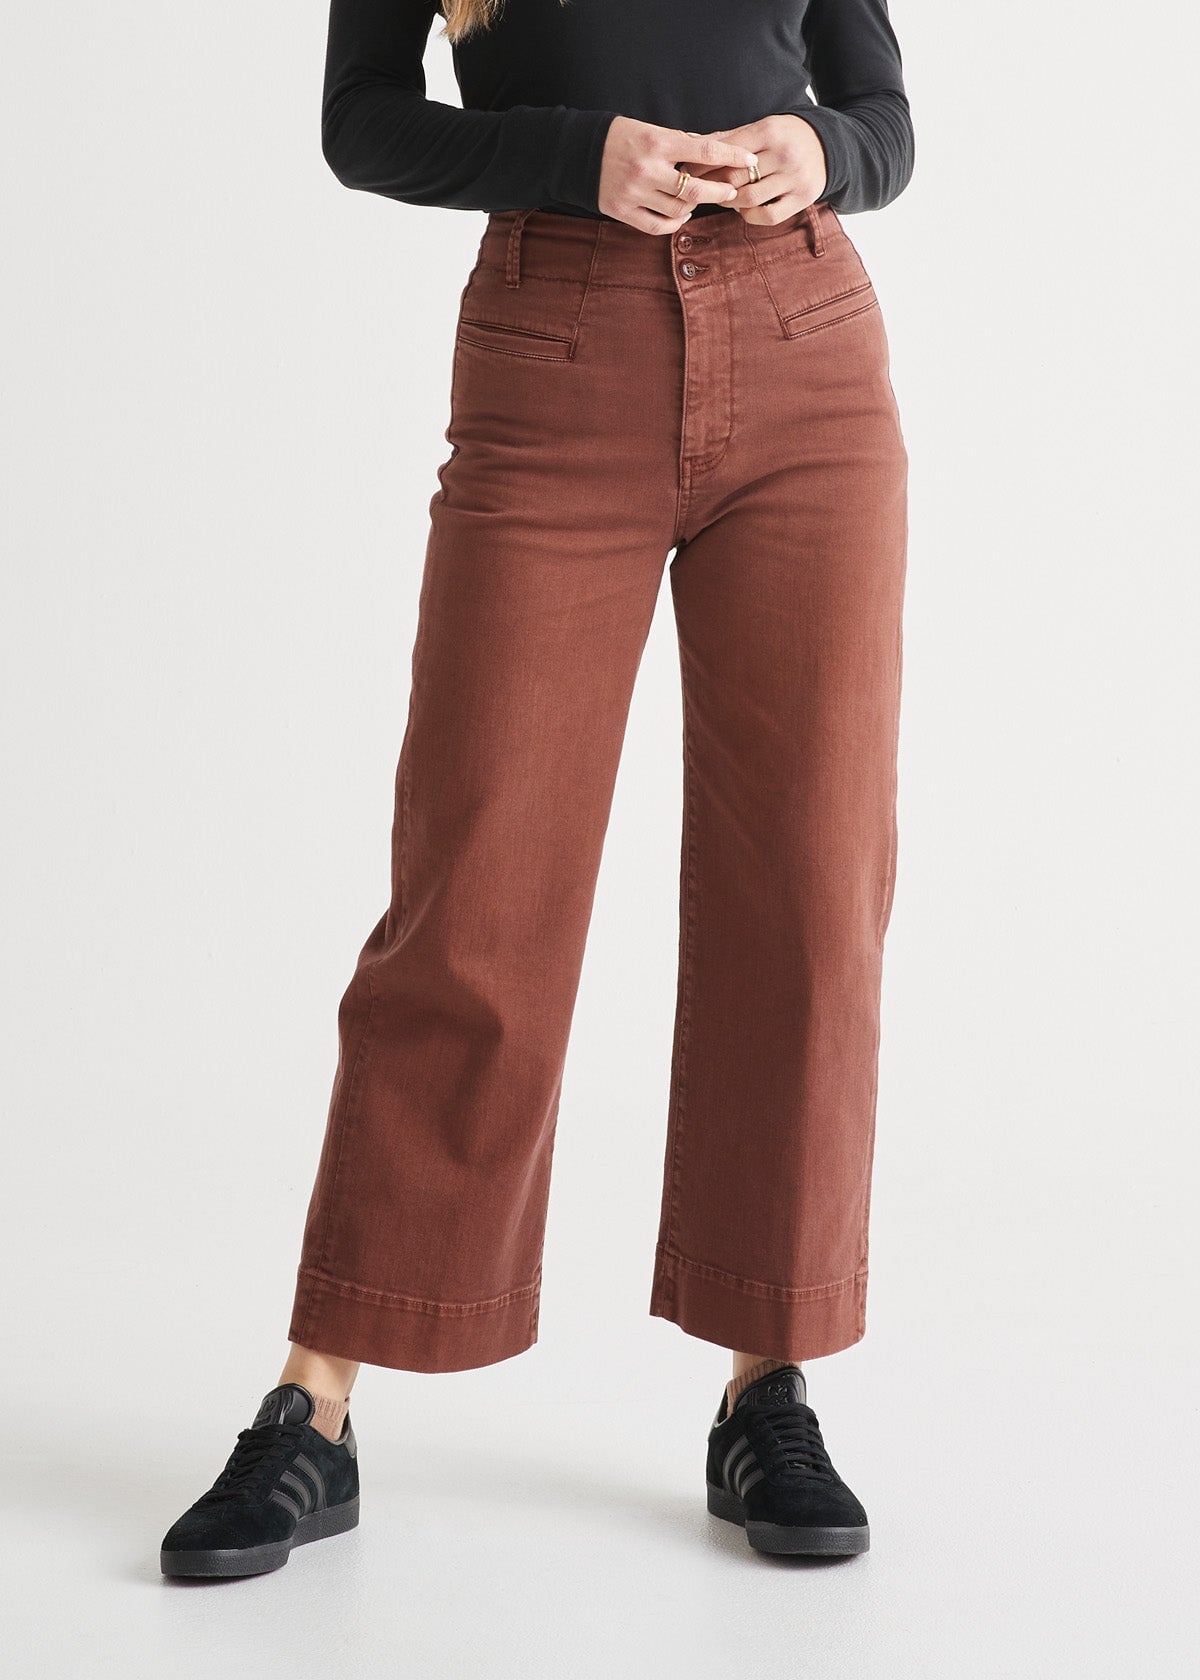 Gap Dress Pants Women's 2 Brown Bootcut Flare Business Casual Stretch  Slacks